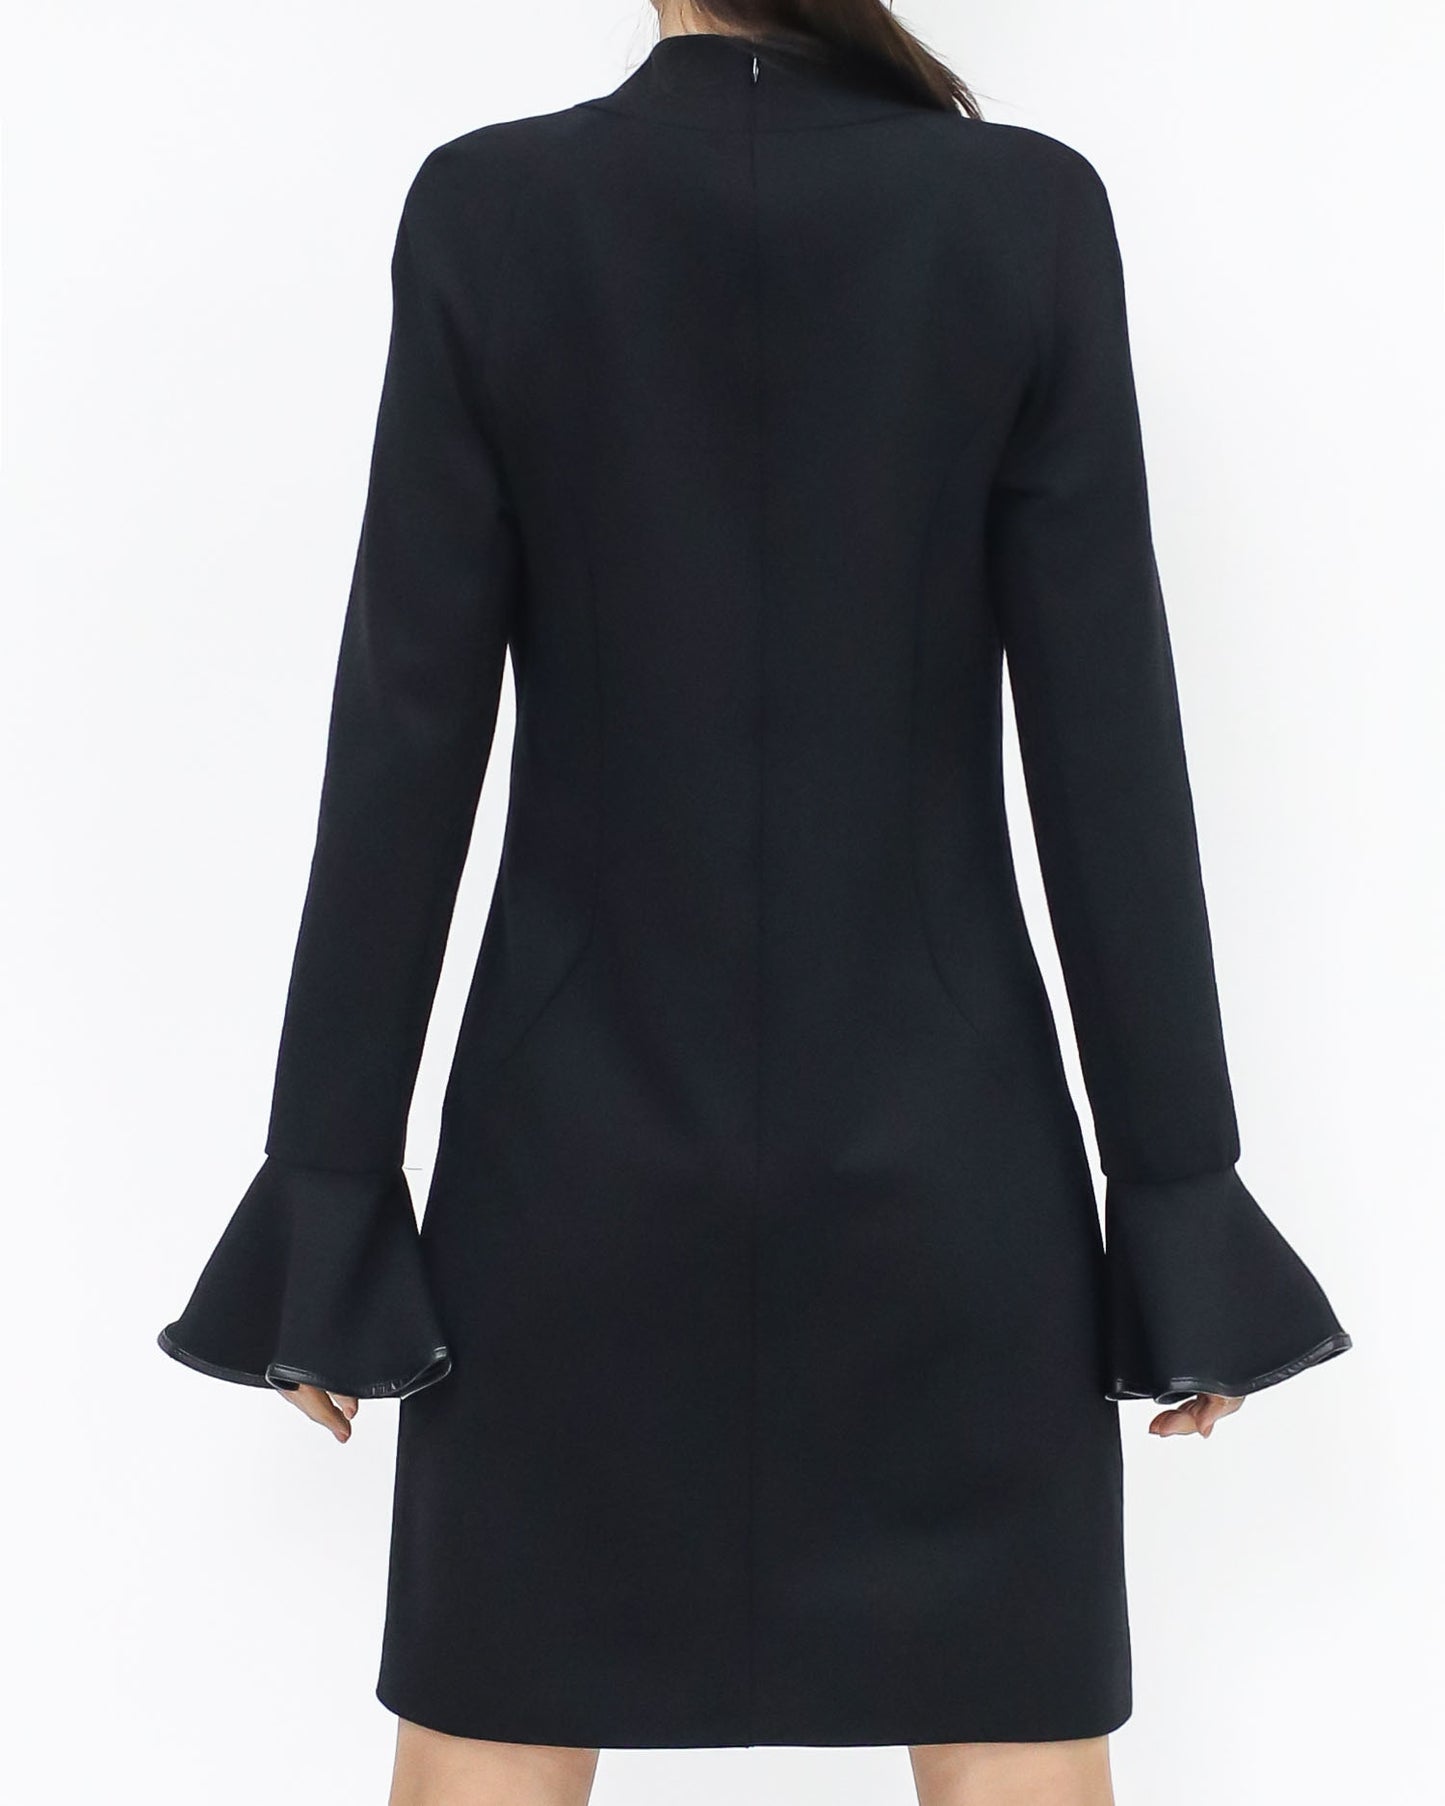 black soft neoprene w/ PU leather pocket front ruffles sleeves dress